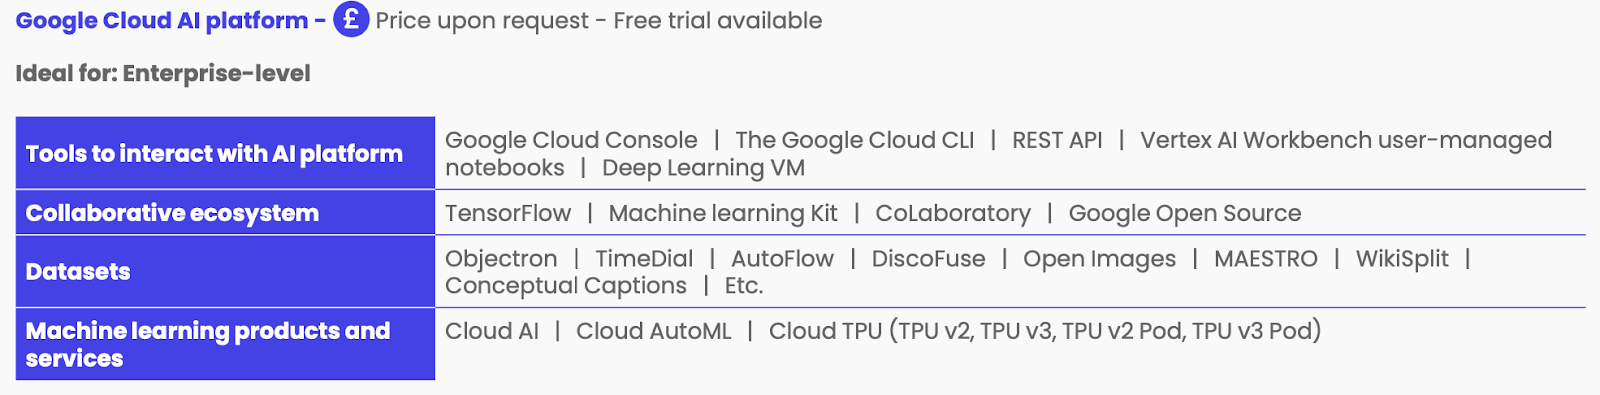 Google Cloud AI platform main features